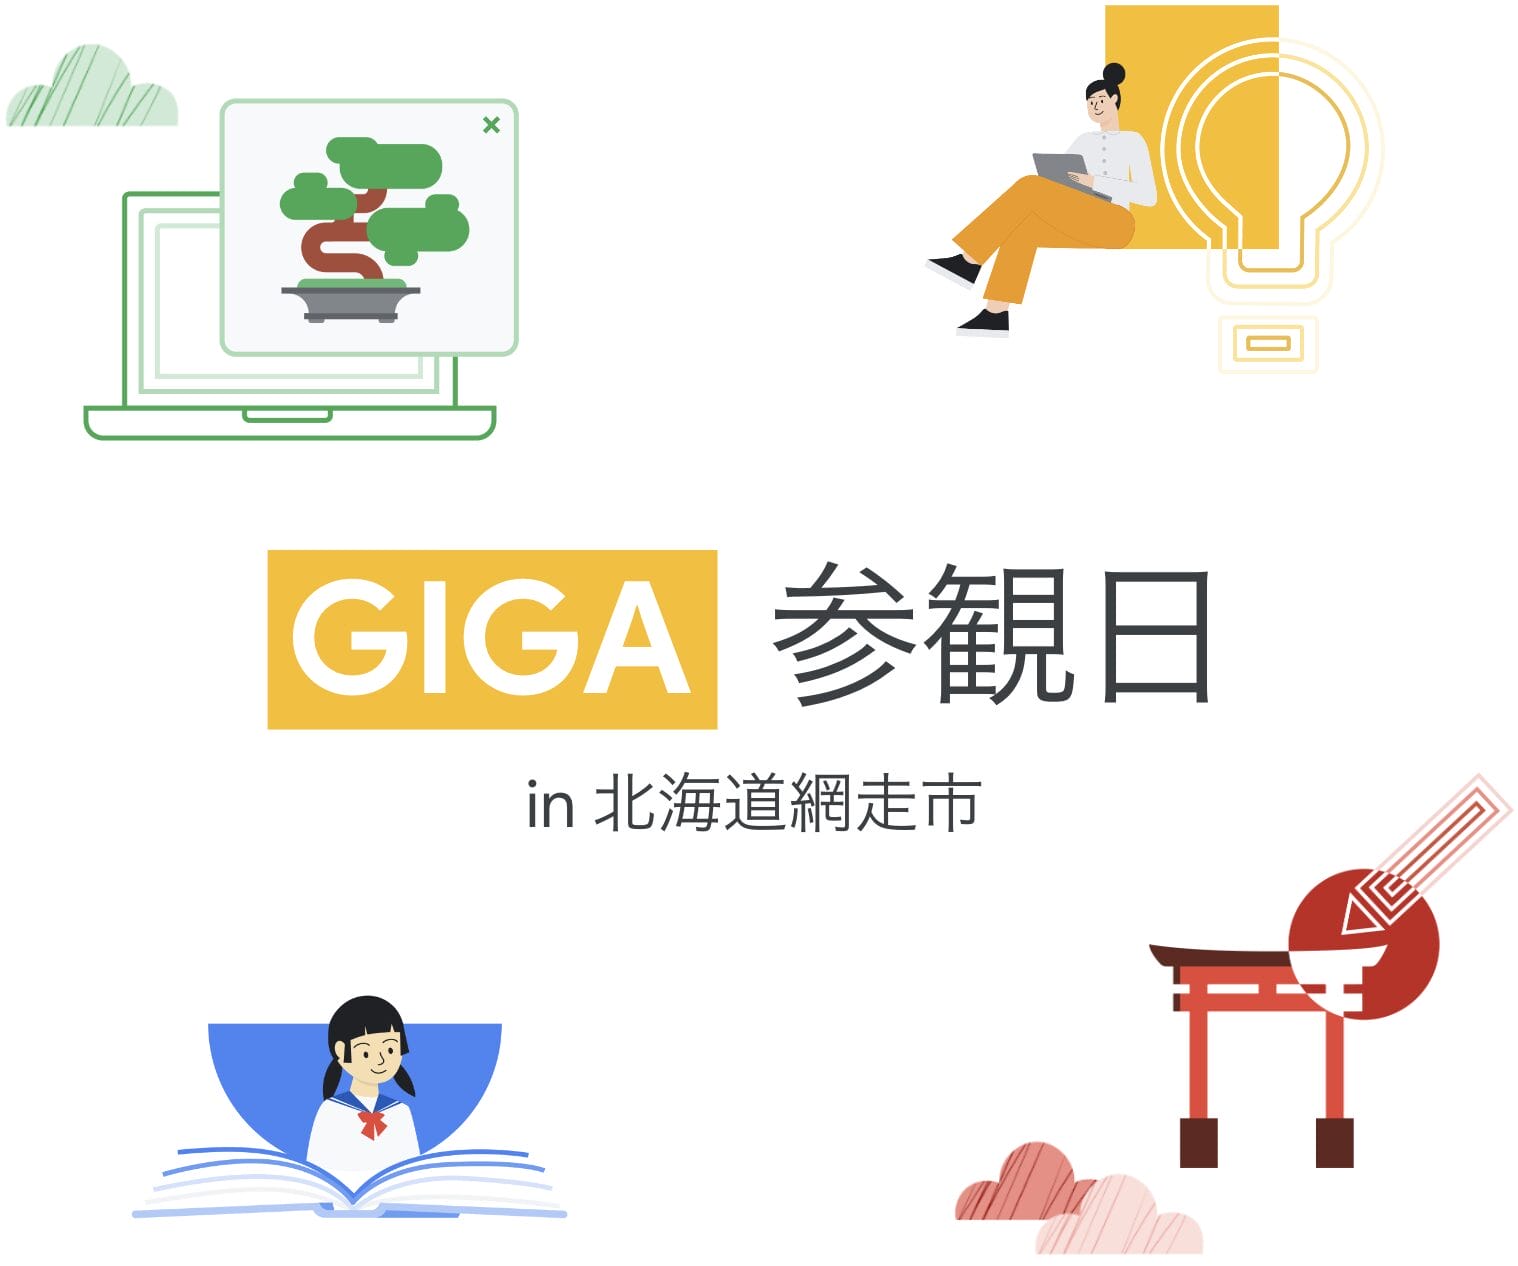 [Google for Education] GIGA 参観日 in 北海道網走市